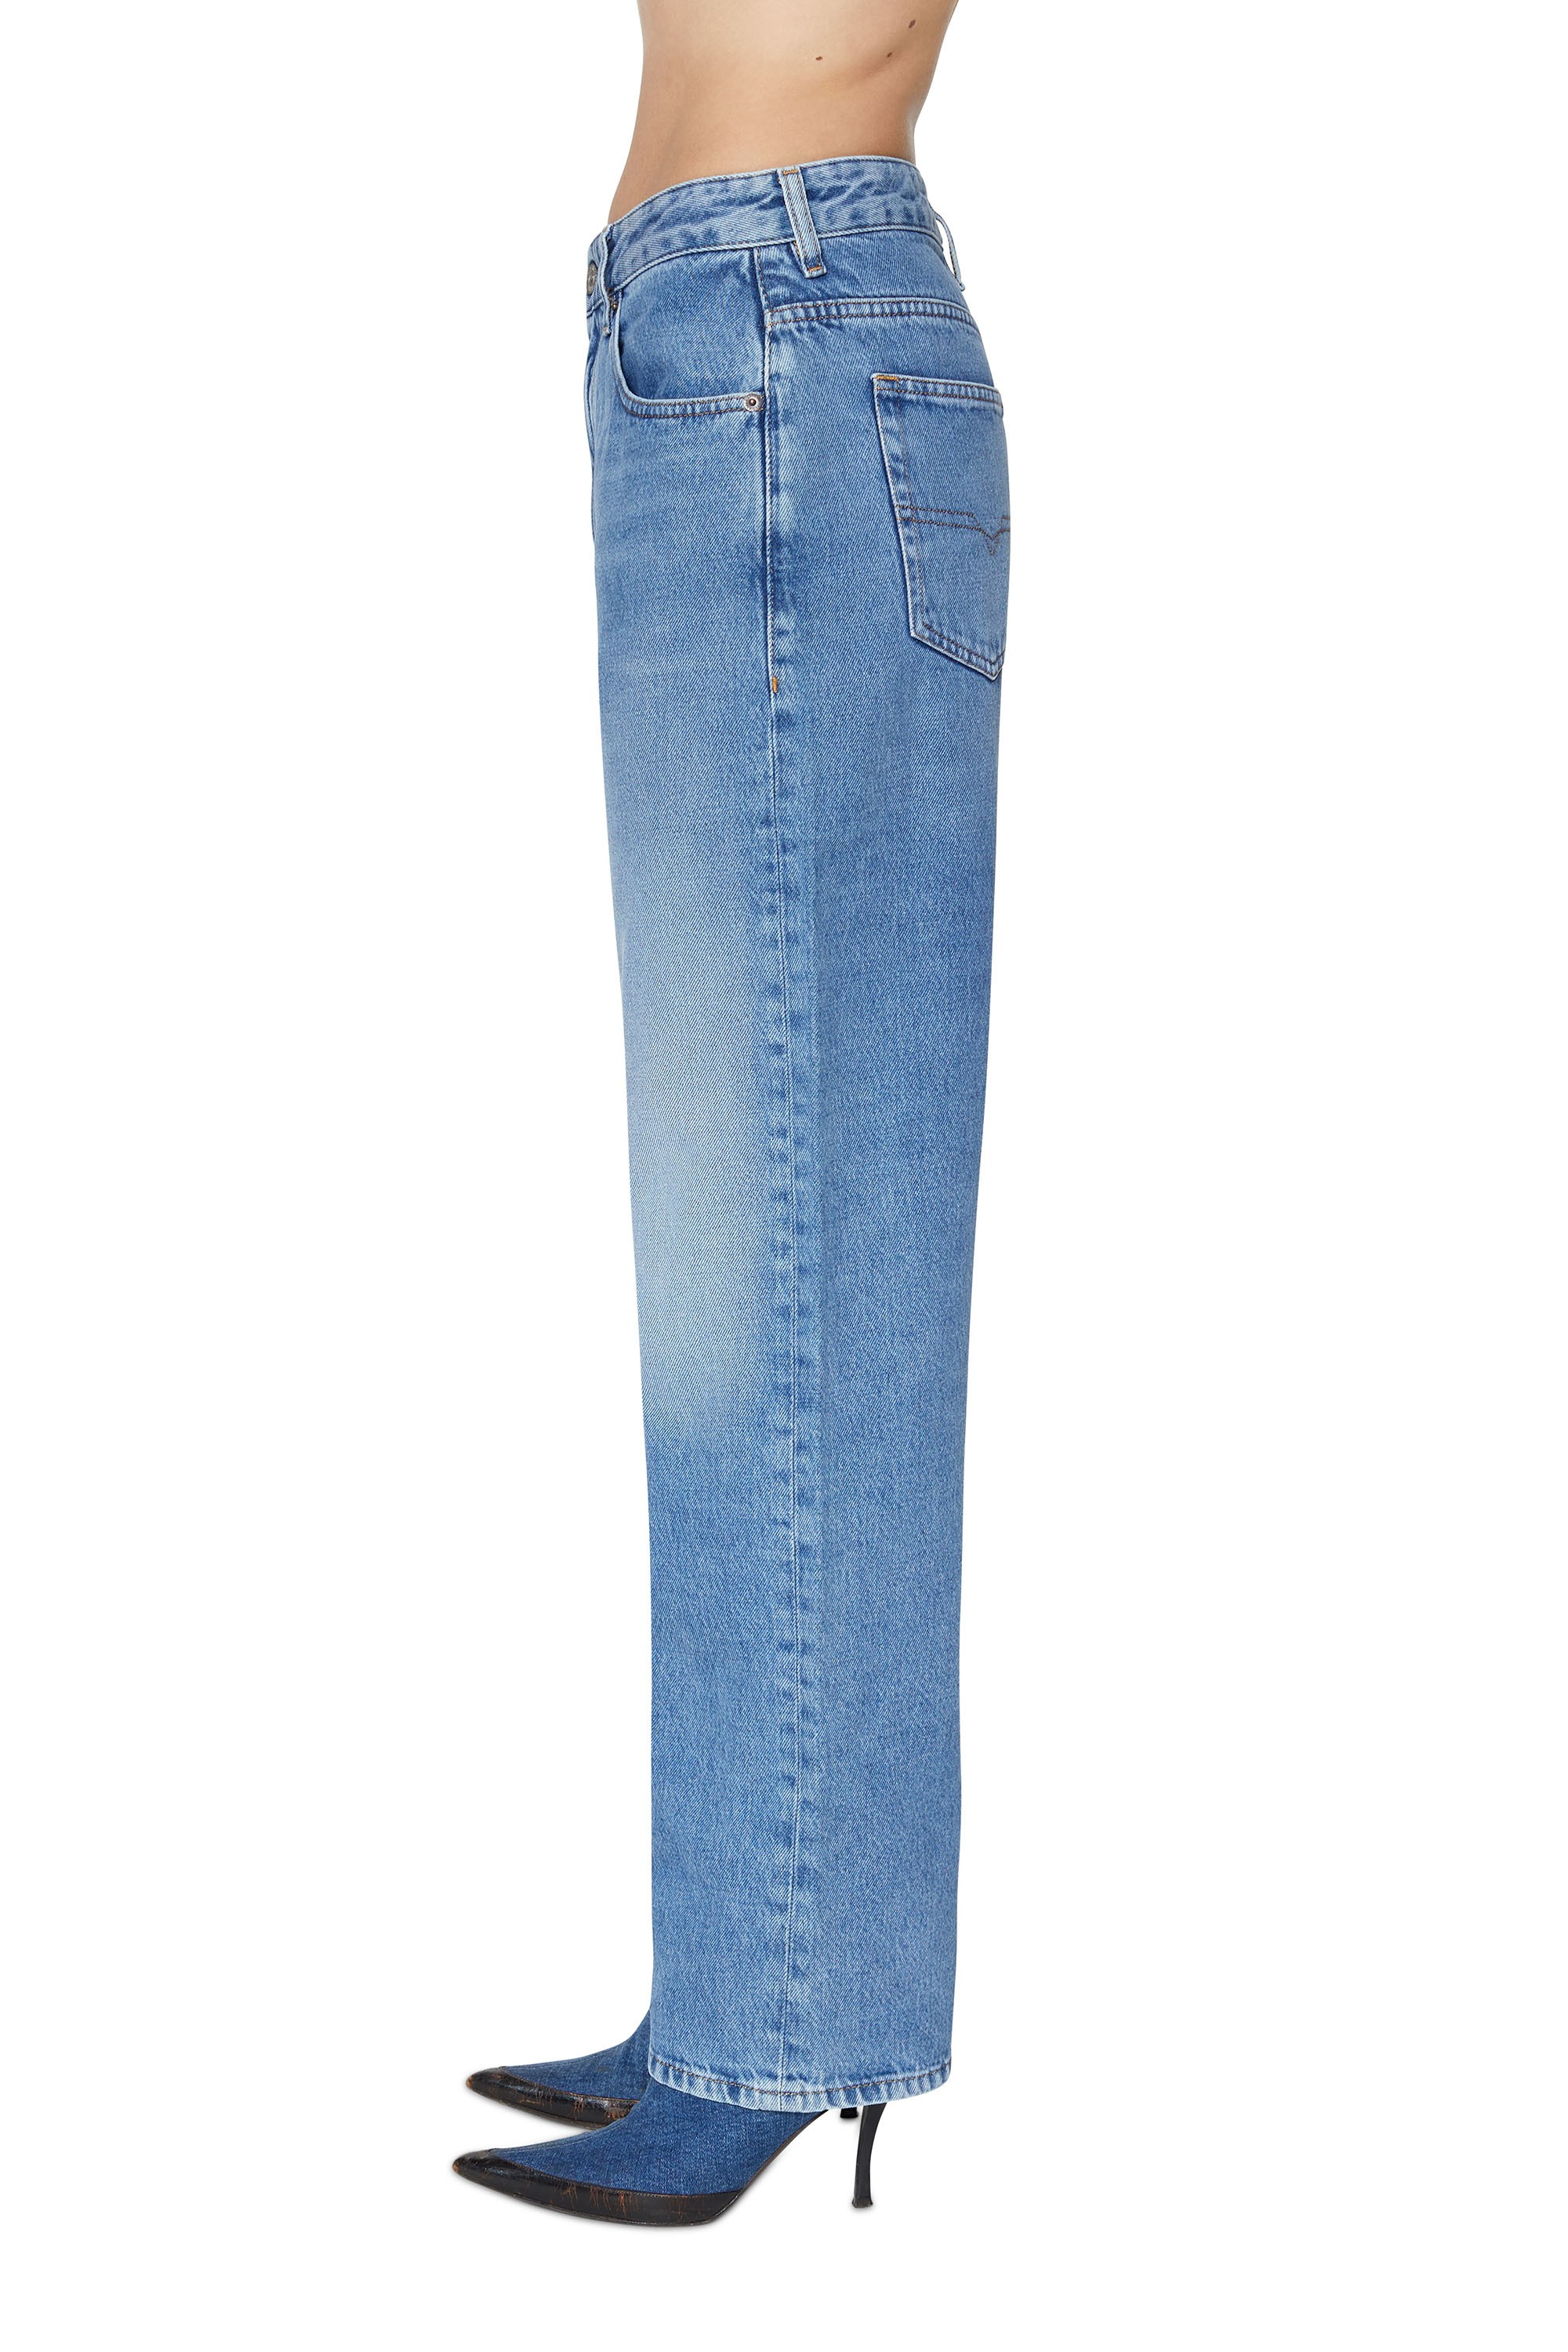 Bershka mom-fit jeans Black 32                  EU discount 94% WOMEN FASHION Jeans NO STYLE 